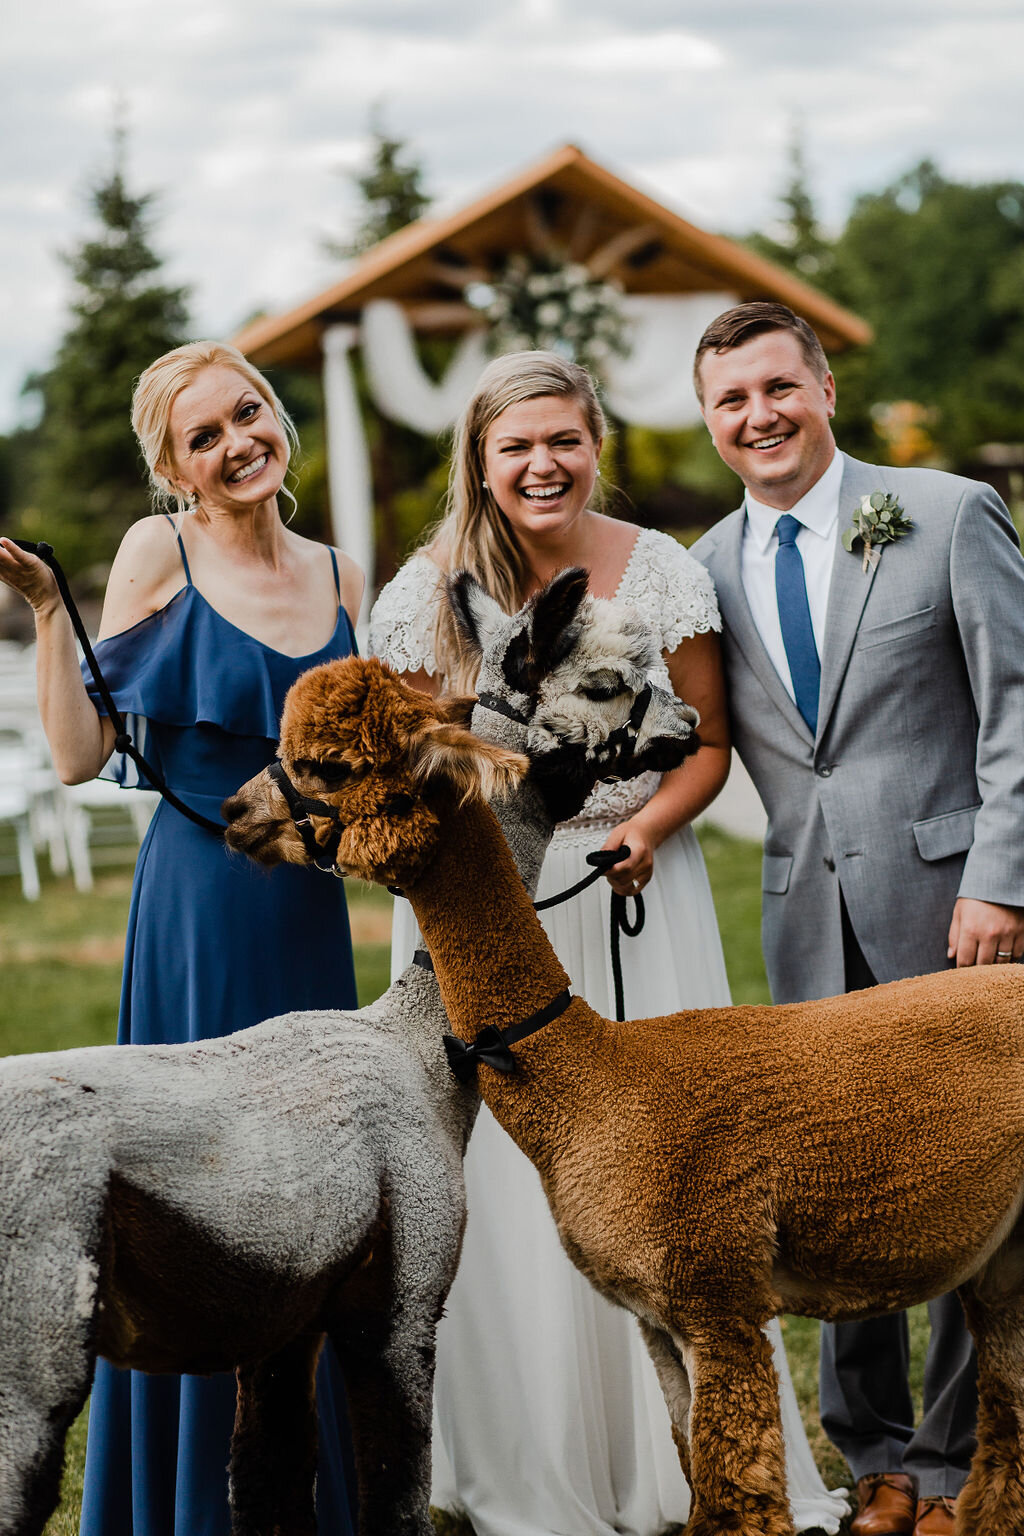 Wedding Fun With the Alpacas